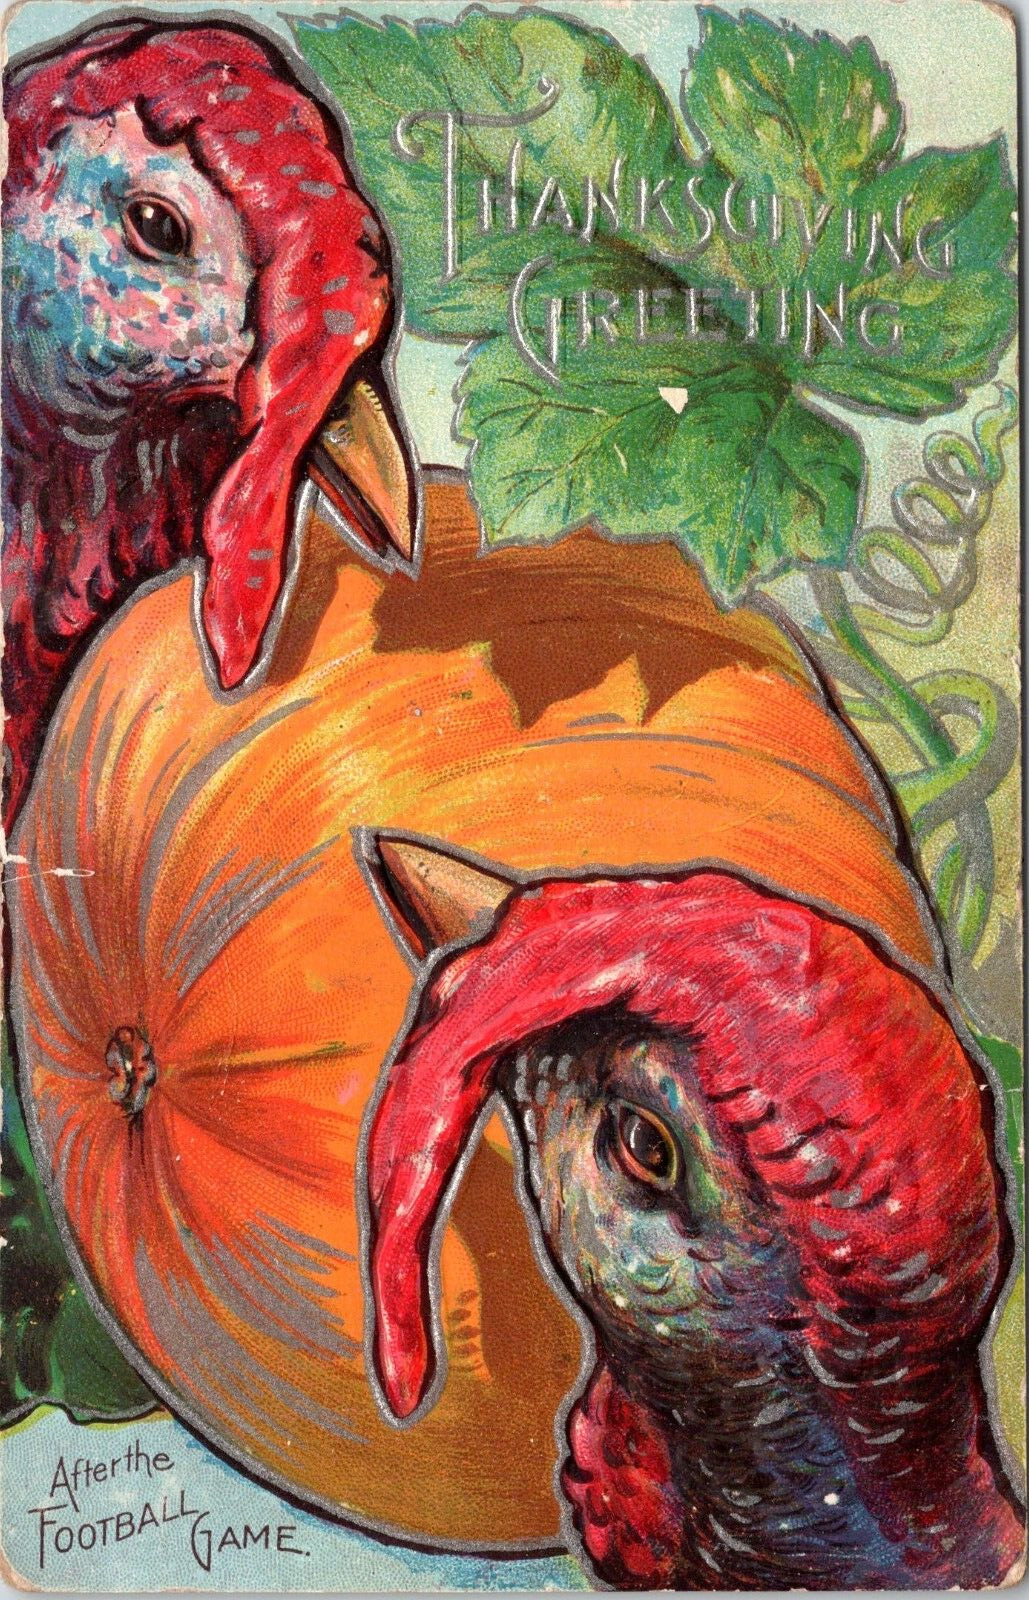 Thanksgiving Greetings After Football Game Embossed Postcard Turkeys Pumpkin